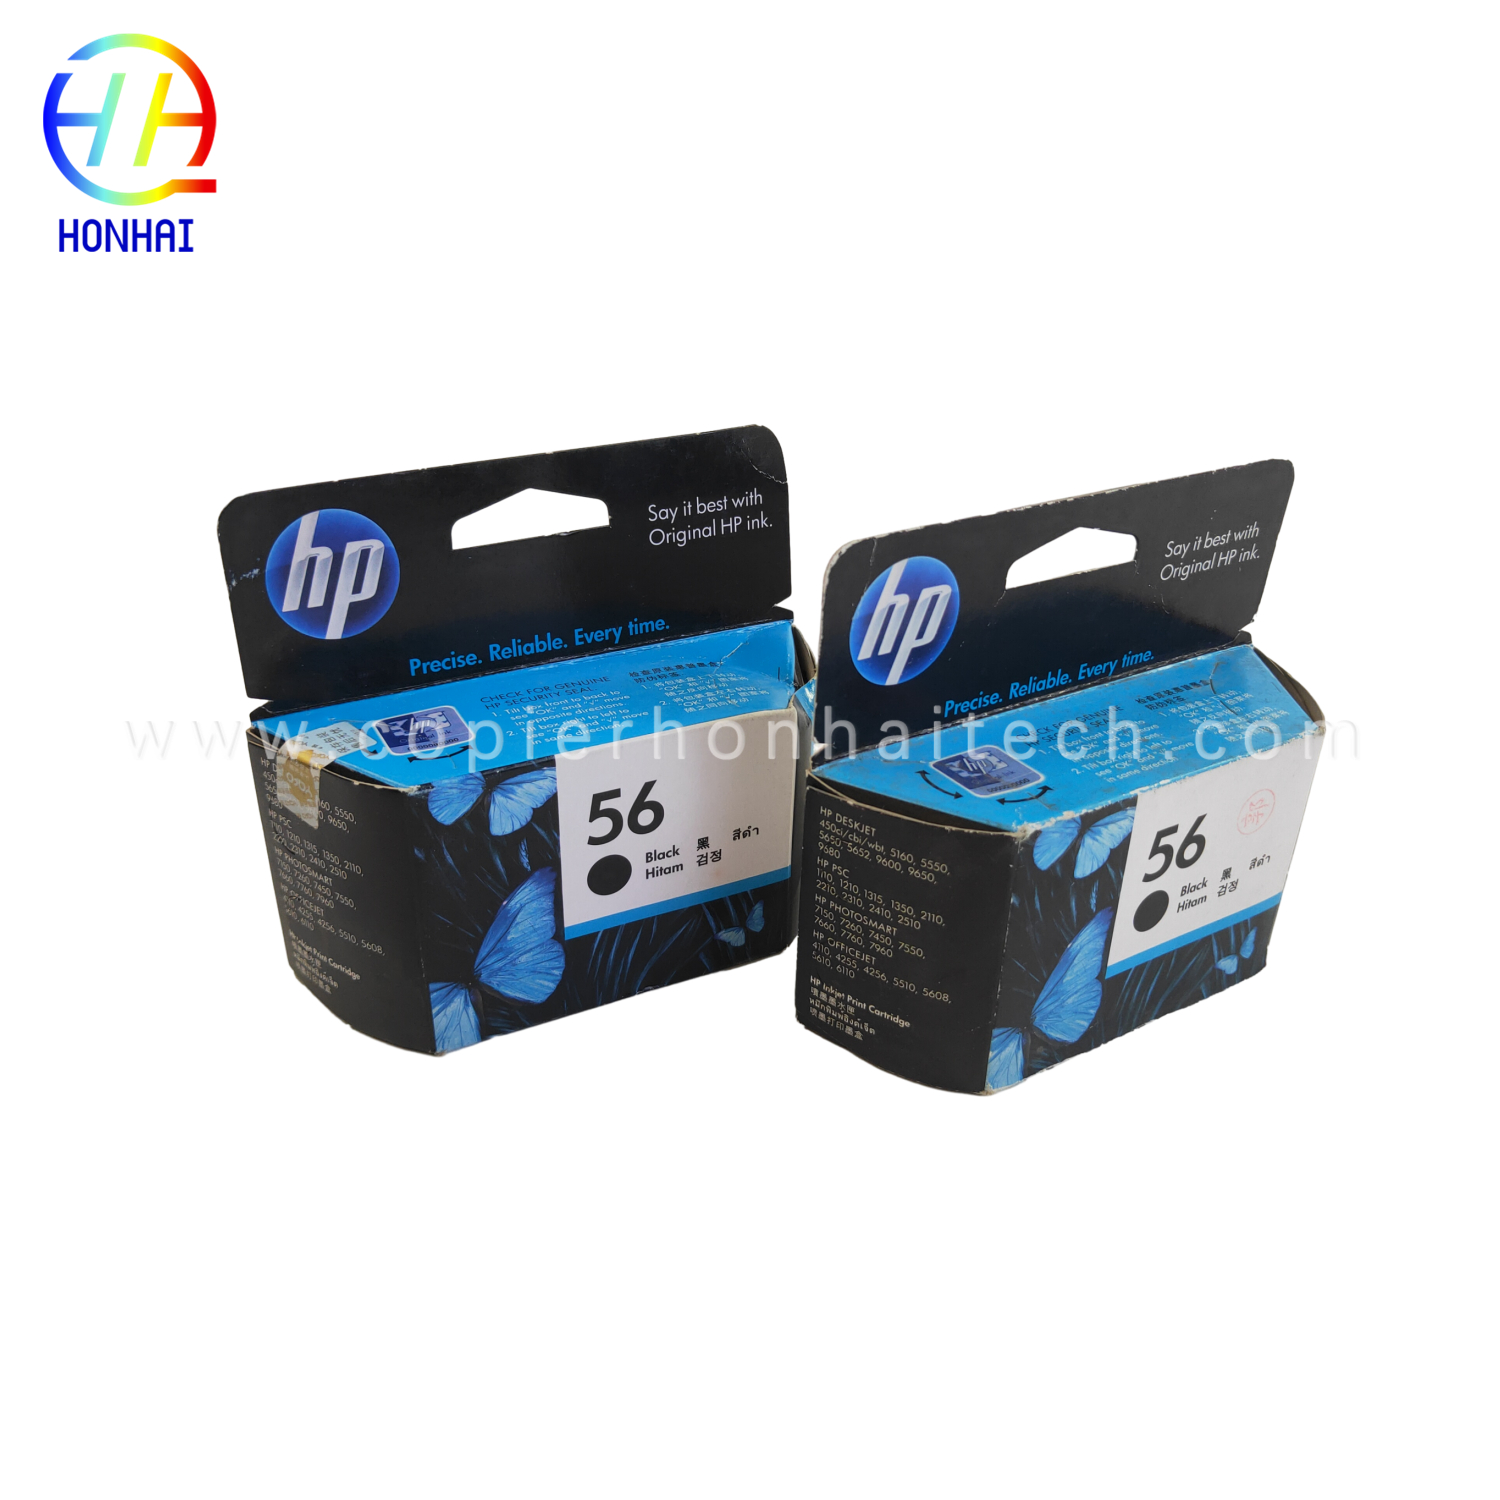 https://www.copierhonhaitech.com/original-black-printer-ink-cartridge-56-for-hp-deskjet-5550-5551-5552-product/